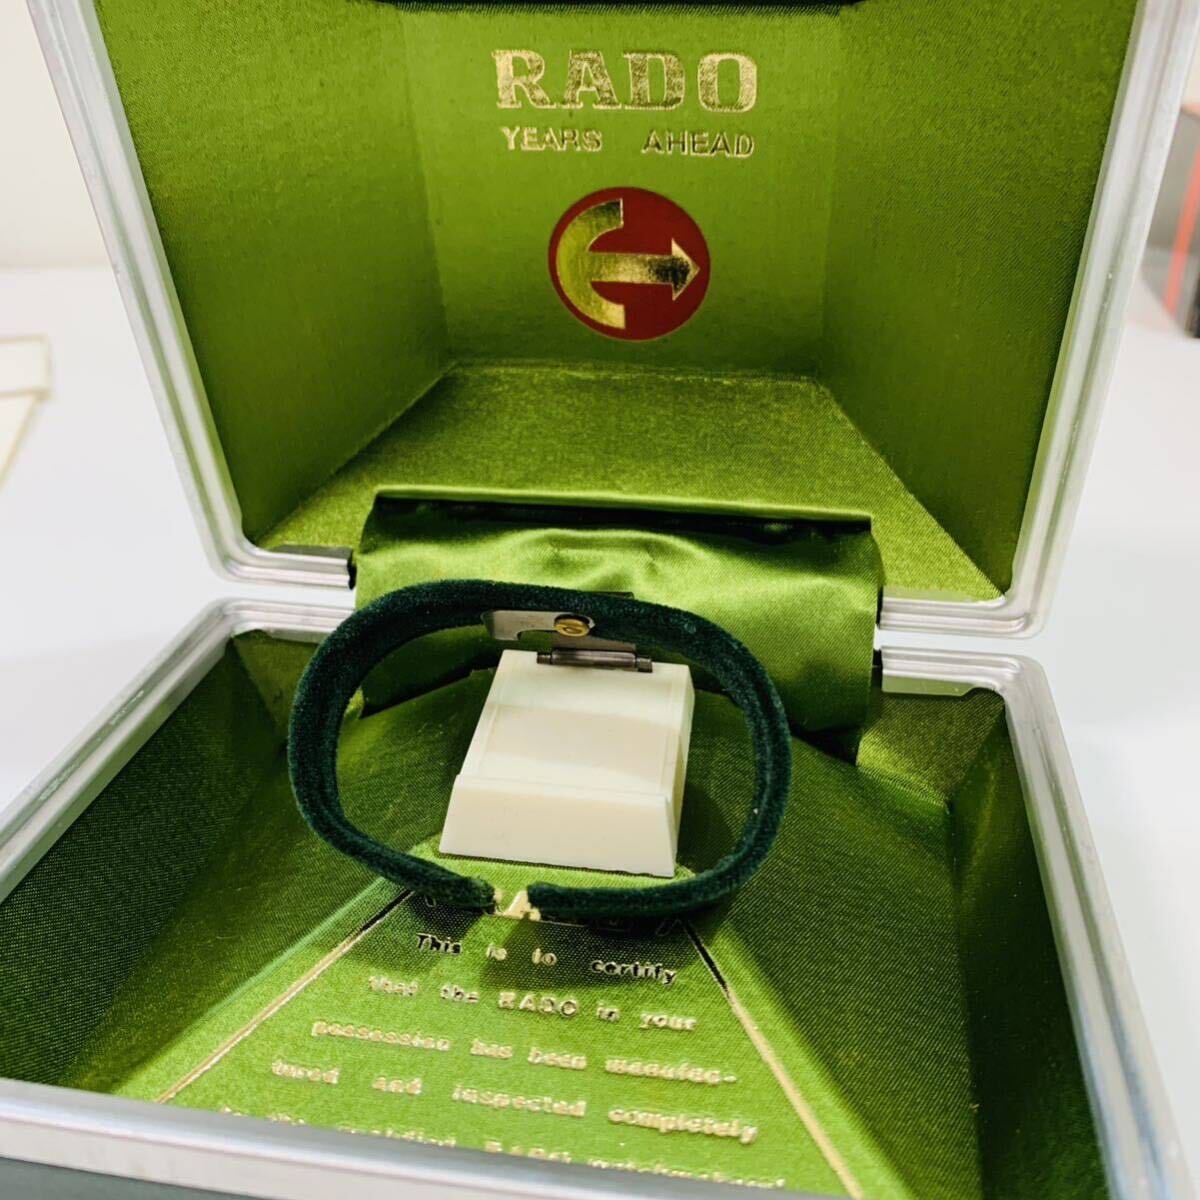 RADO Rado Швейцария наручные часы ke- Swatch кейс box пустой коробка 5 шт. комплект 3 вид наружная коробка внутри коробка YEARS AHEAD мужской женский бренд 